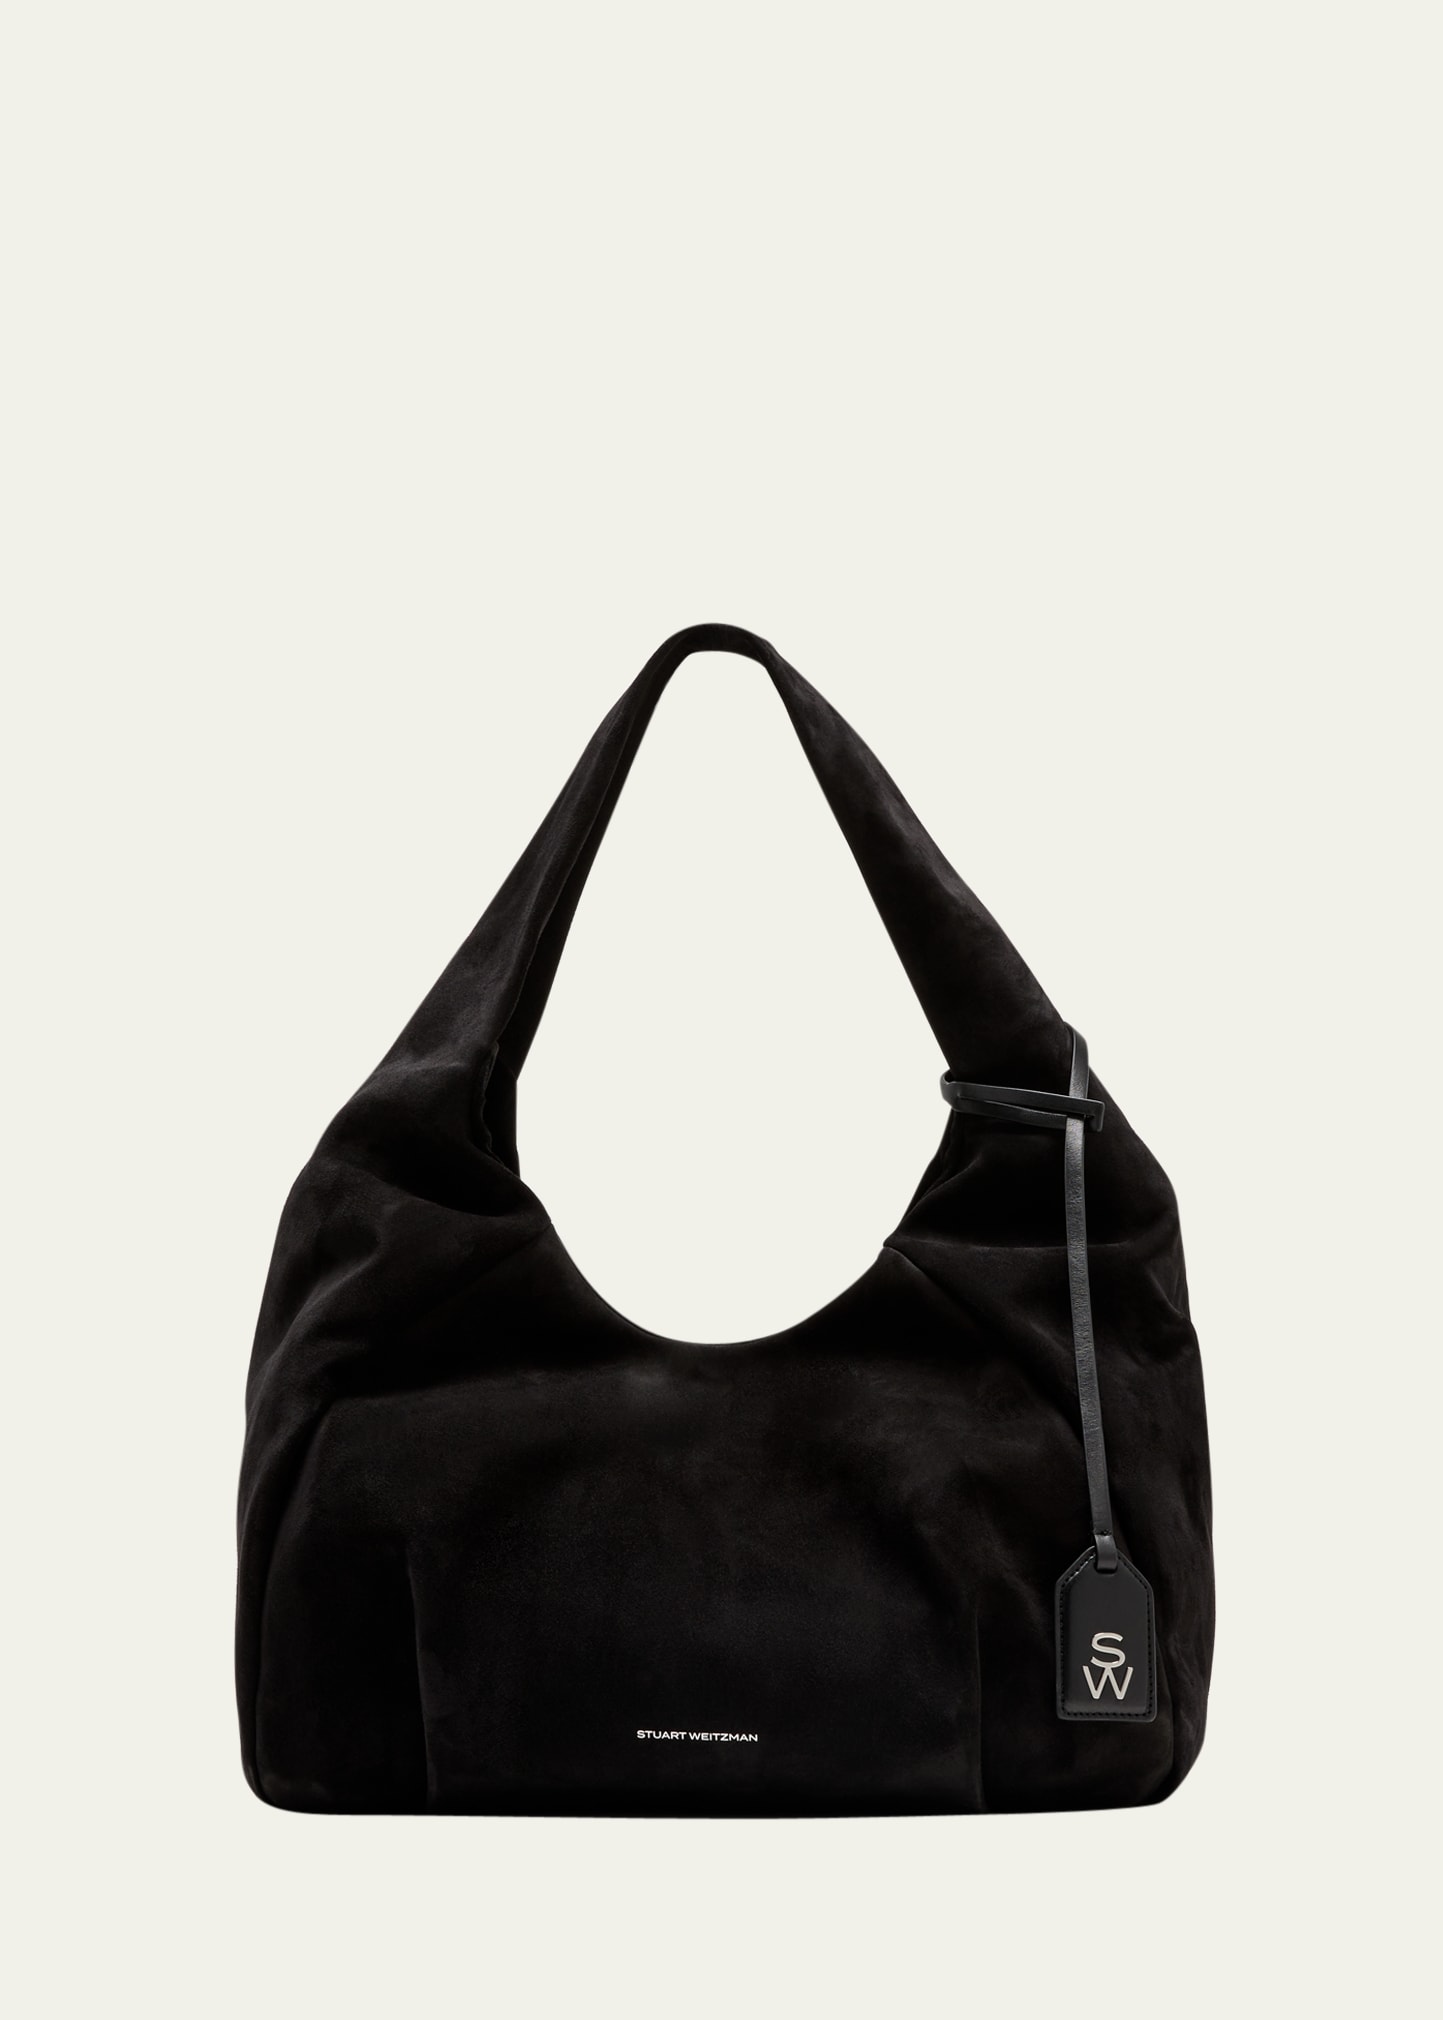 Stuart Weitzman The Moda Suede Hobo Bag In Black